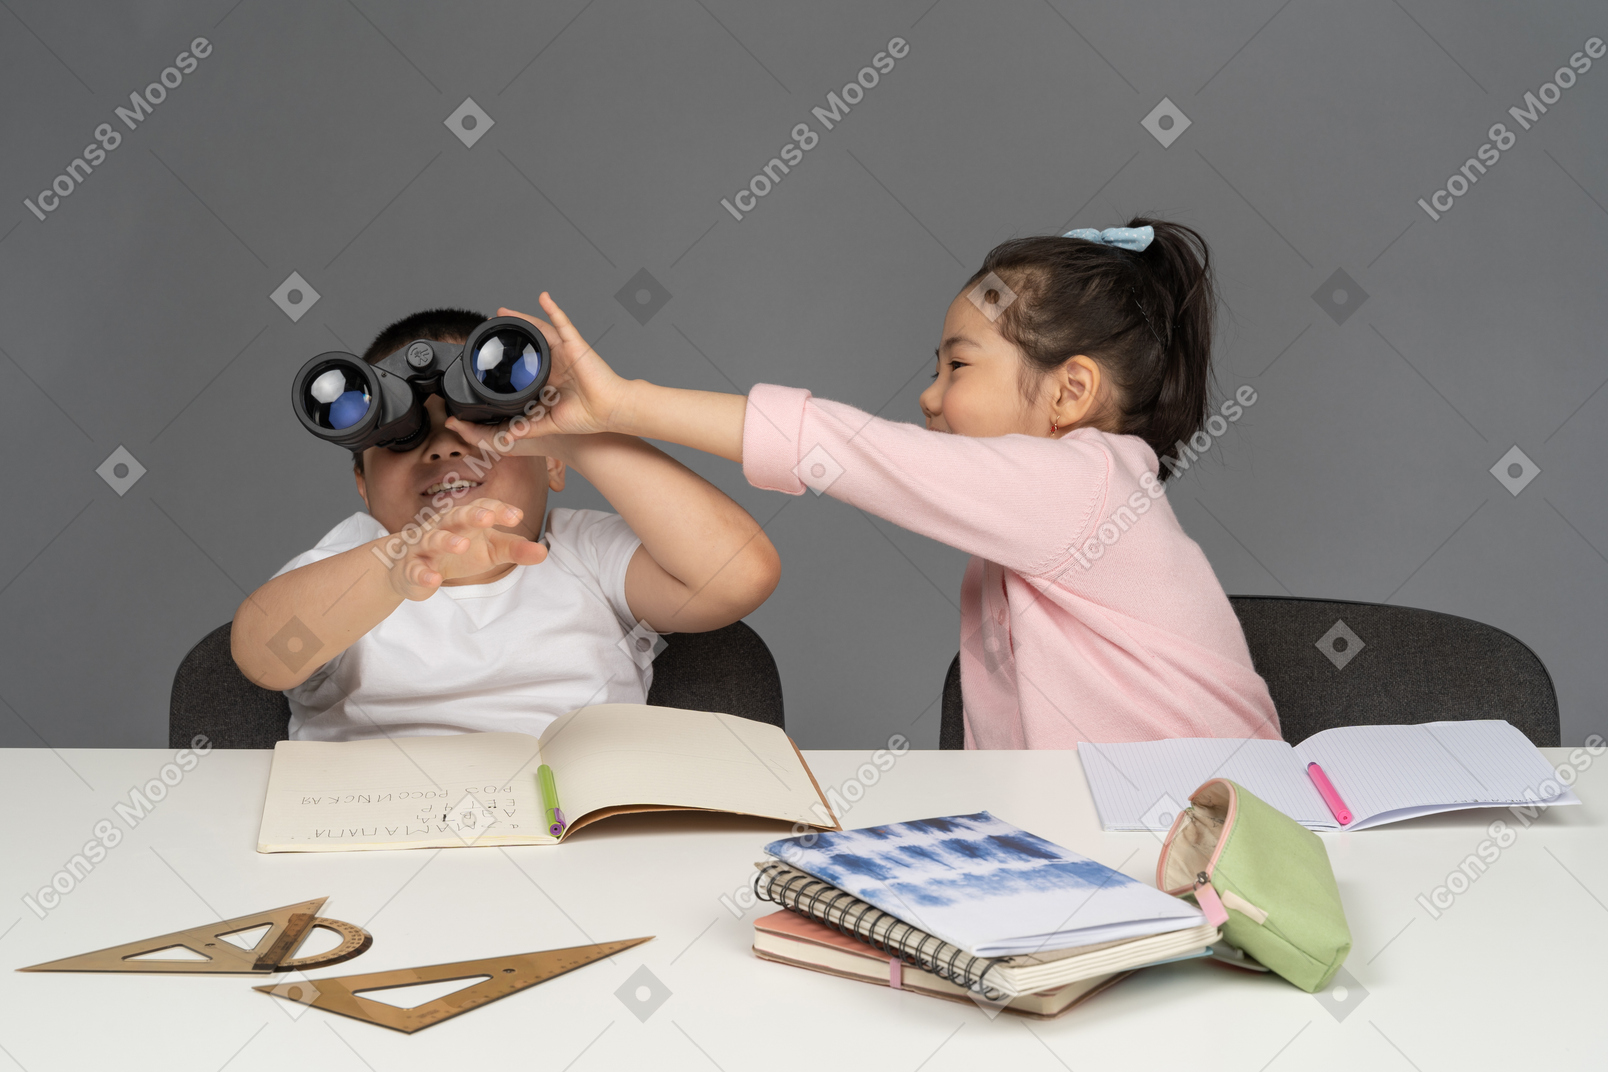 Little girl taking binoculars from her brother